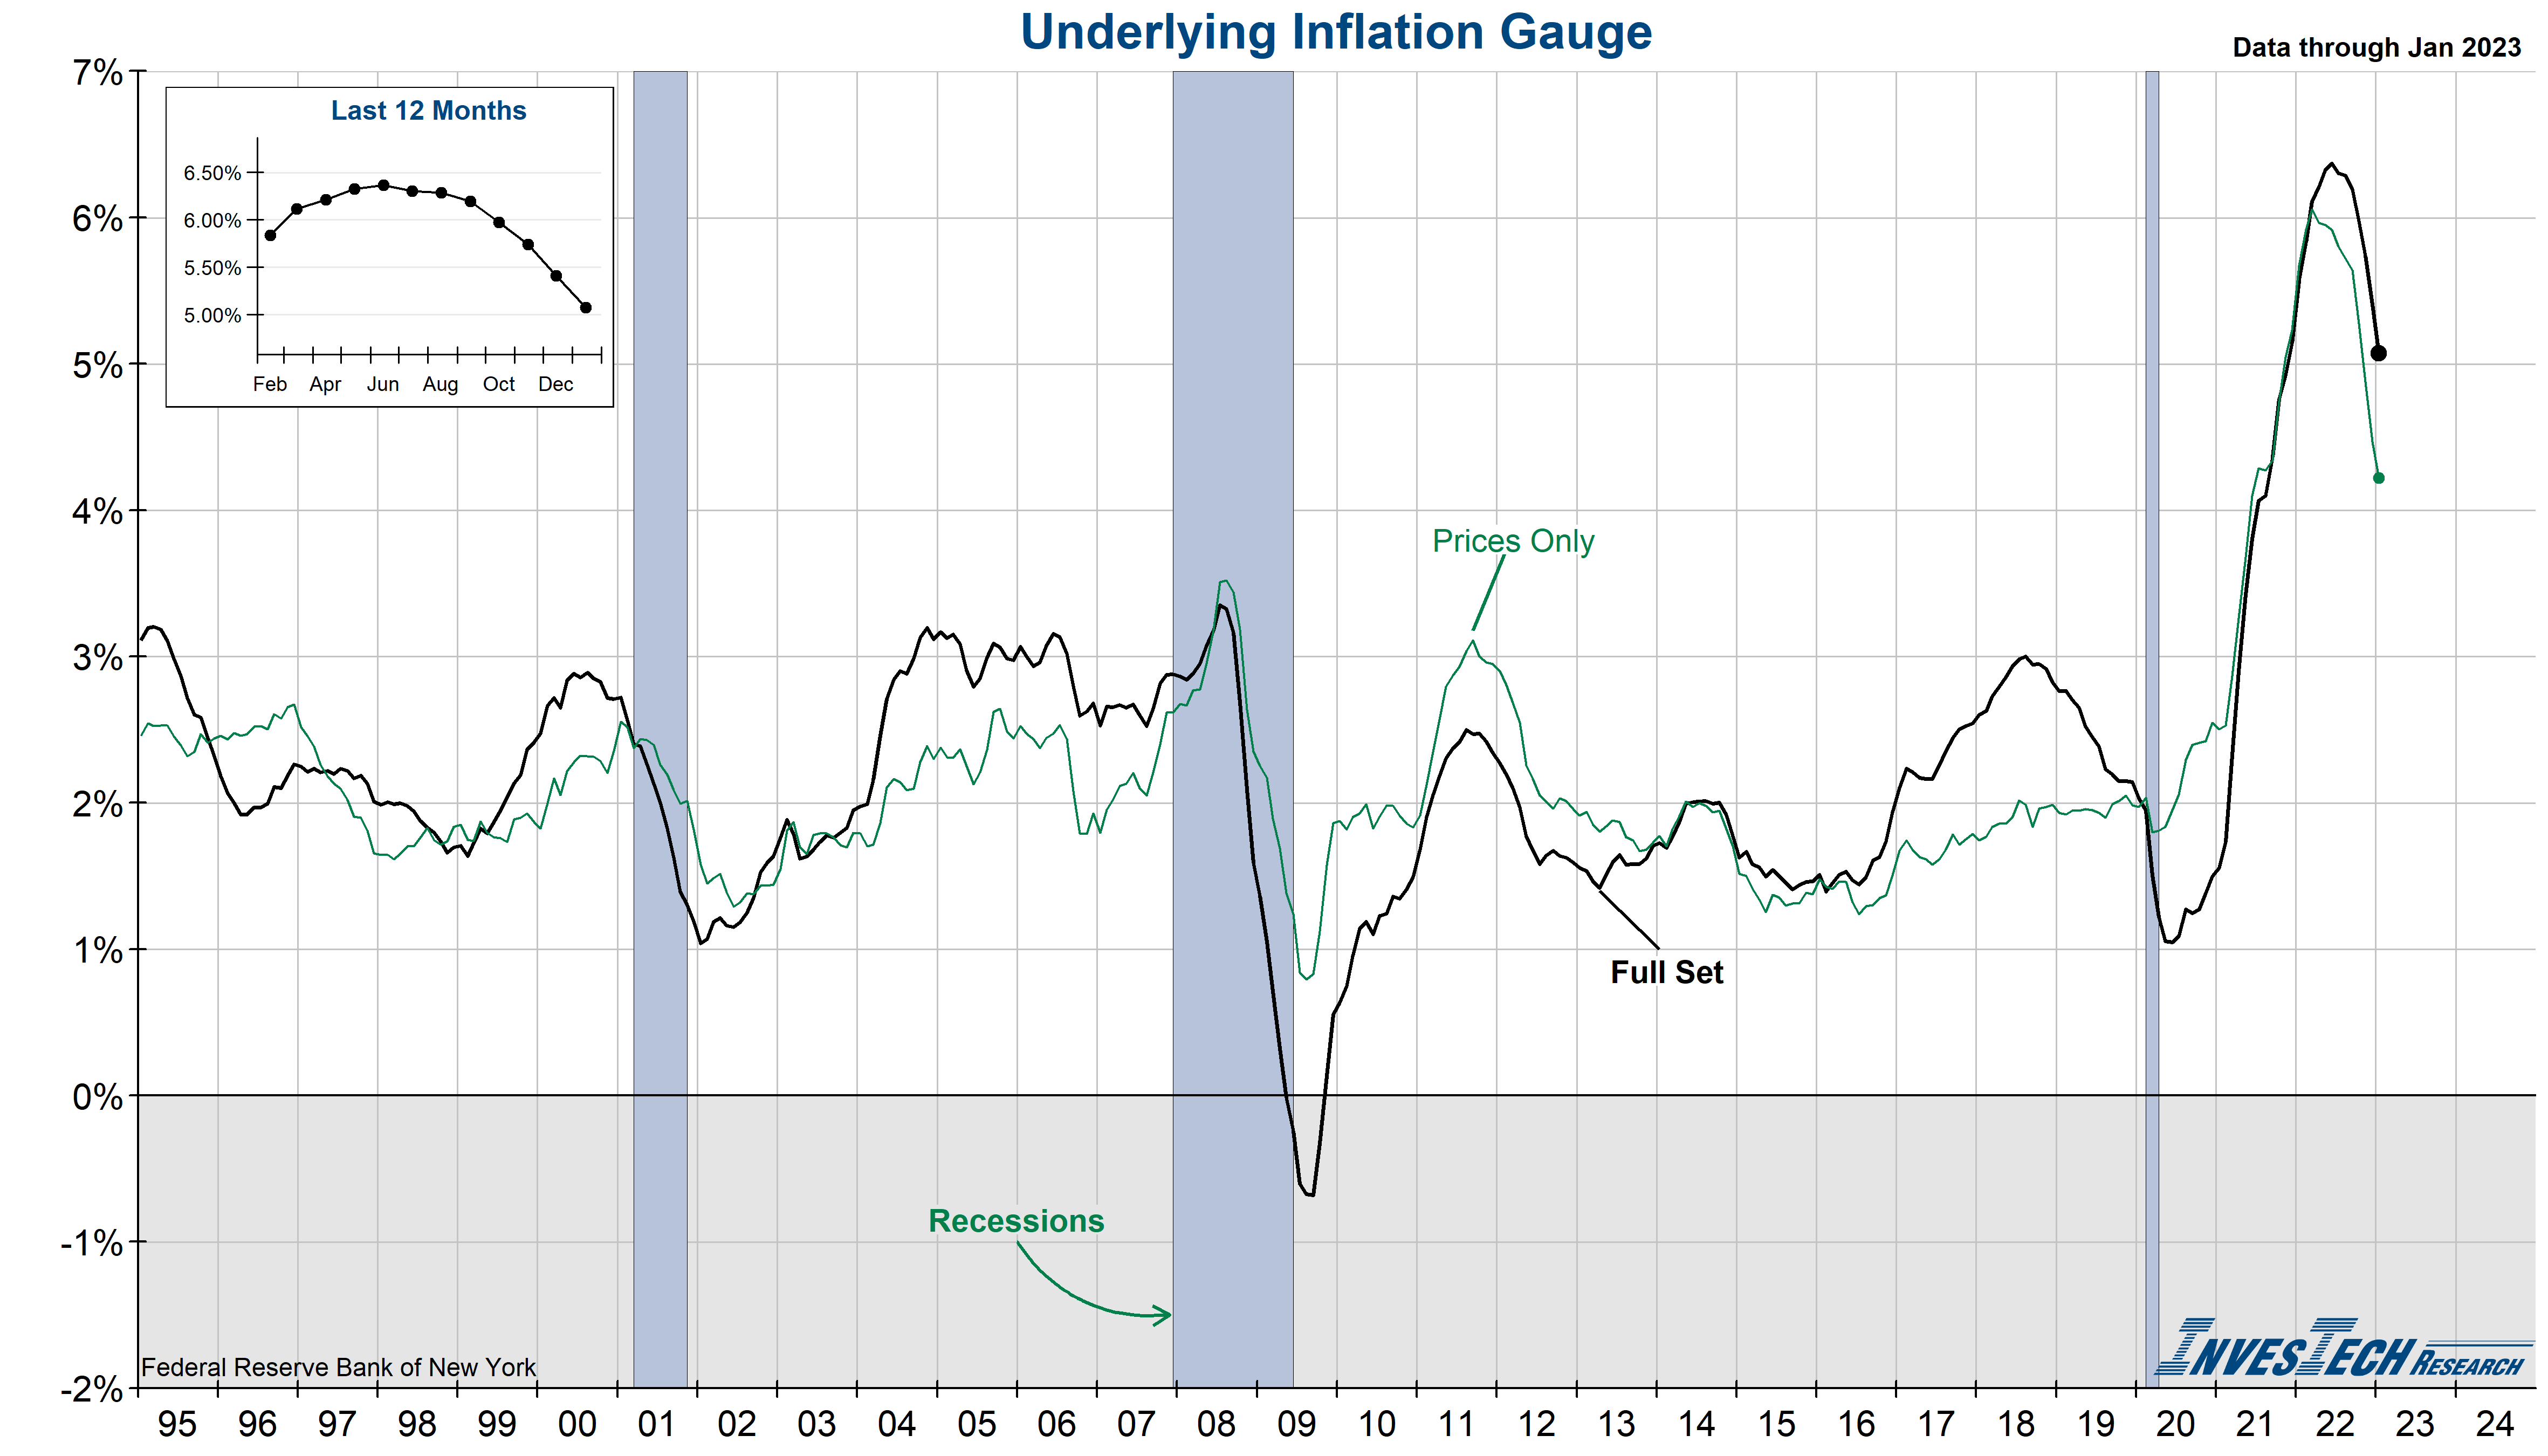 Underlying Inflation Gauge (UIG)